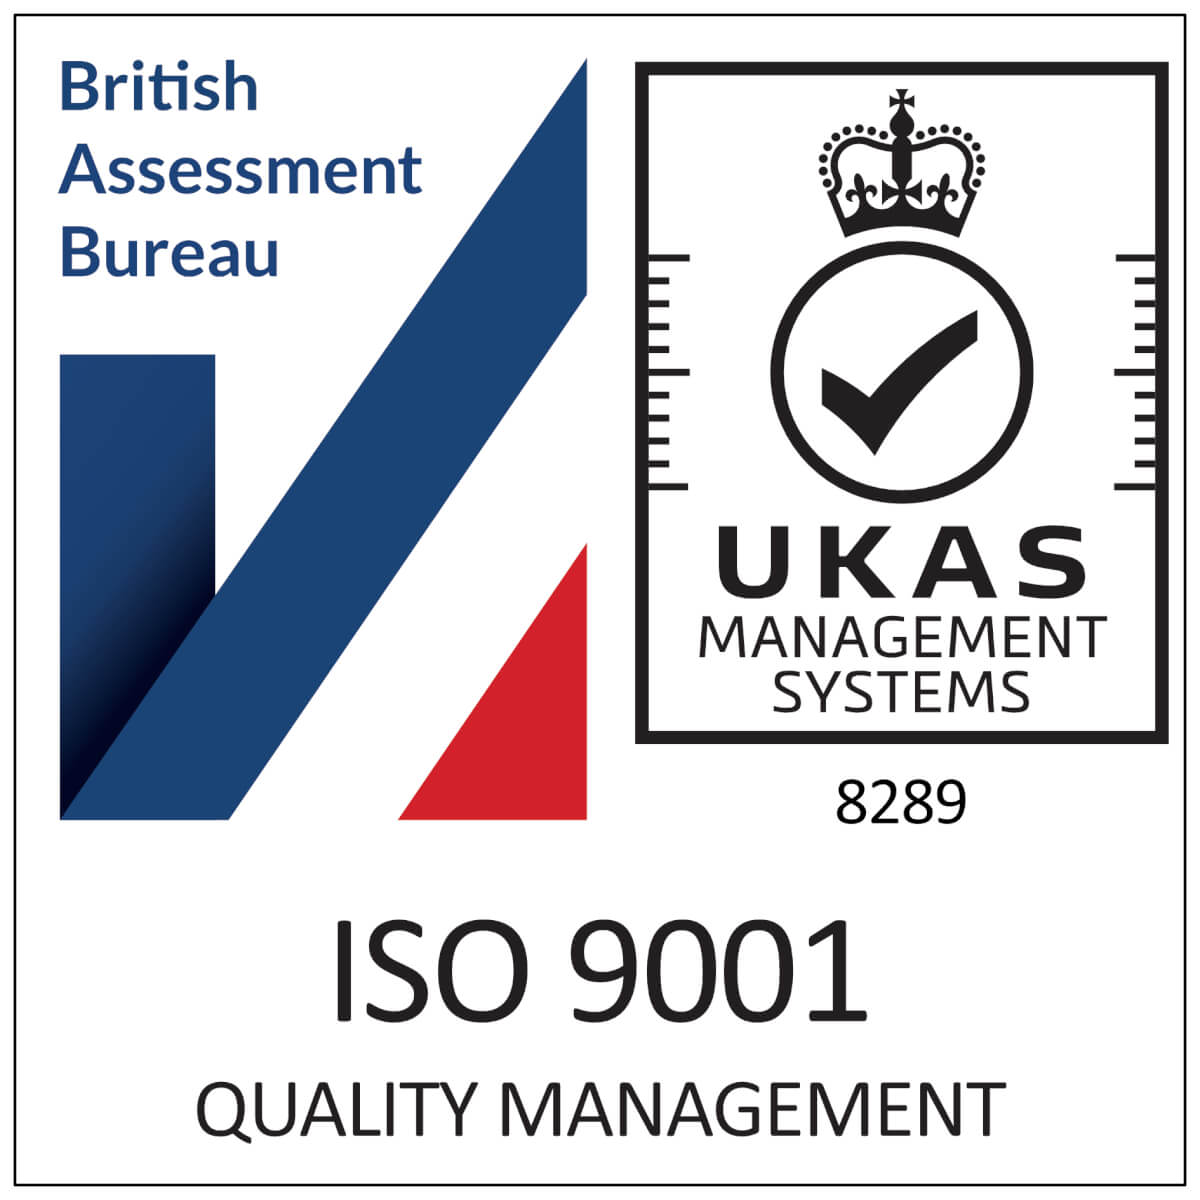 ISO 9001 badge image